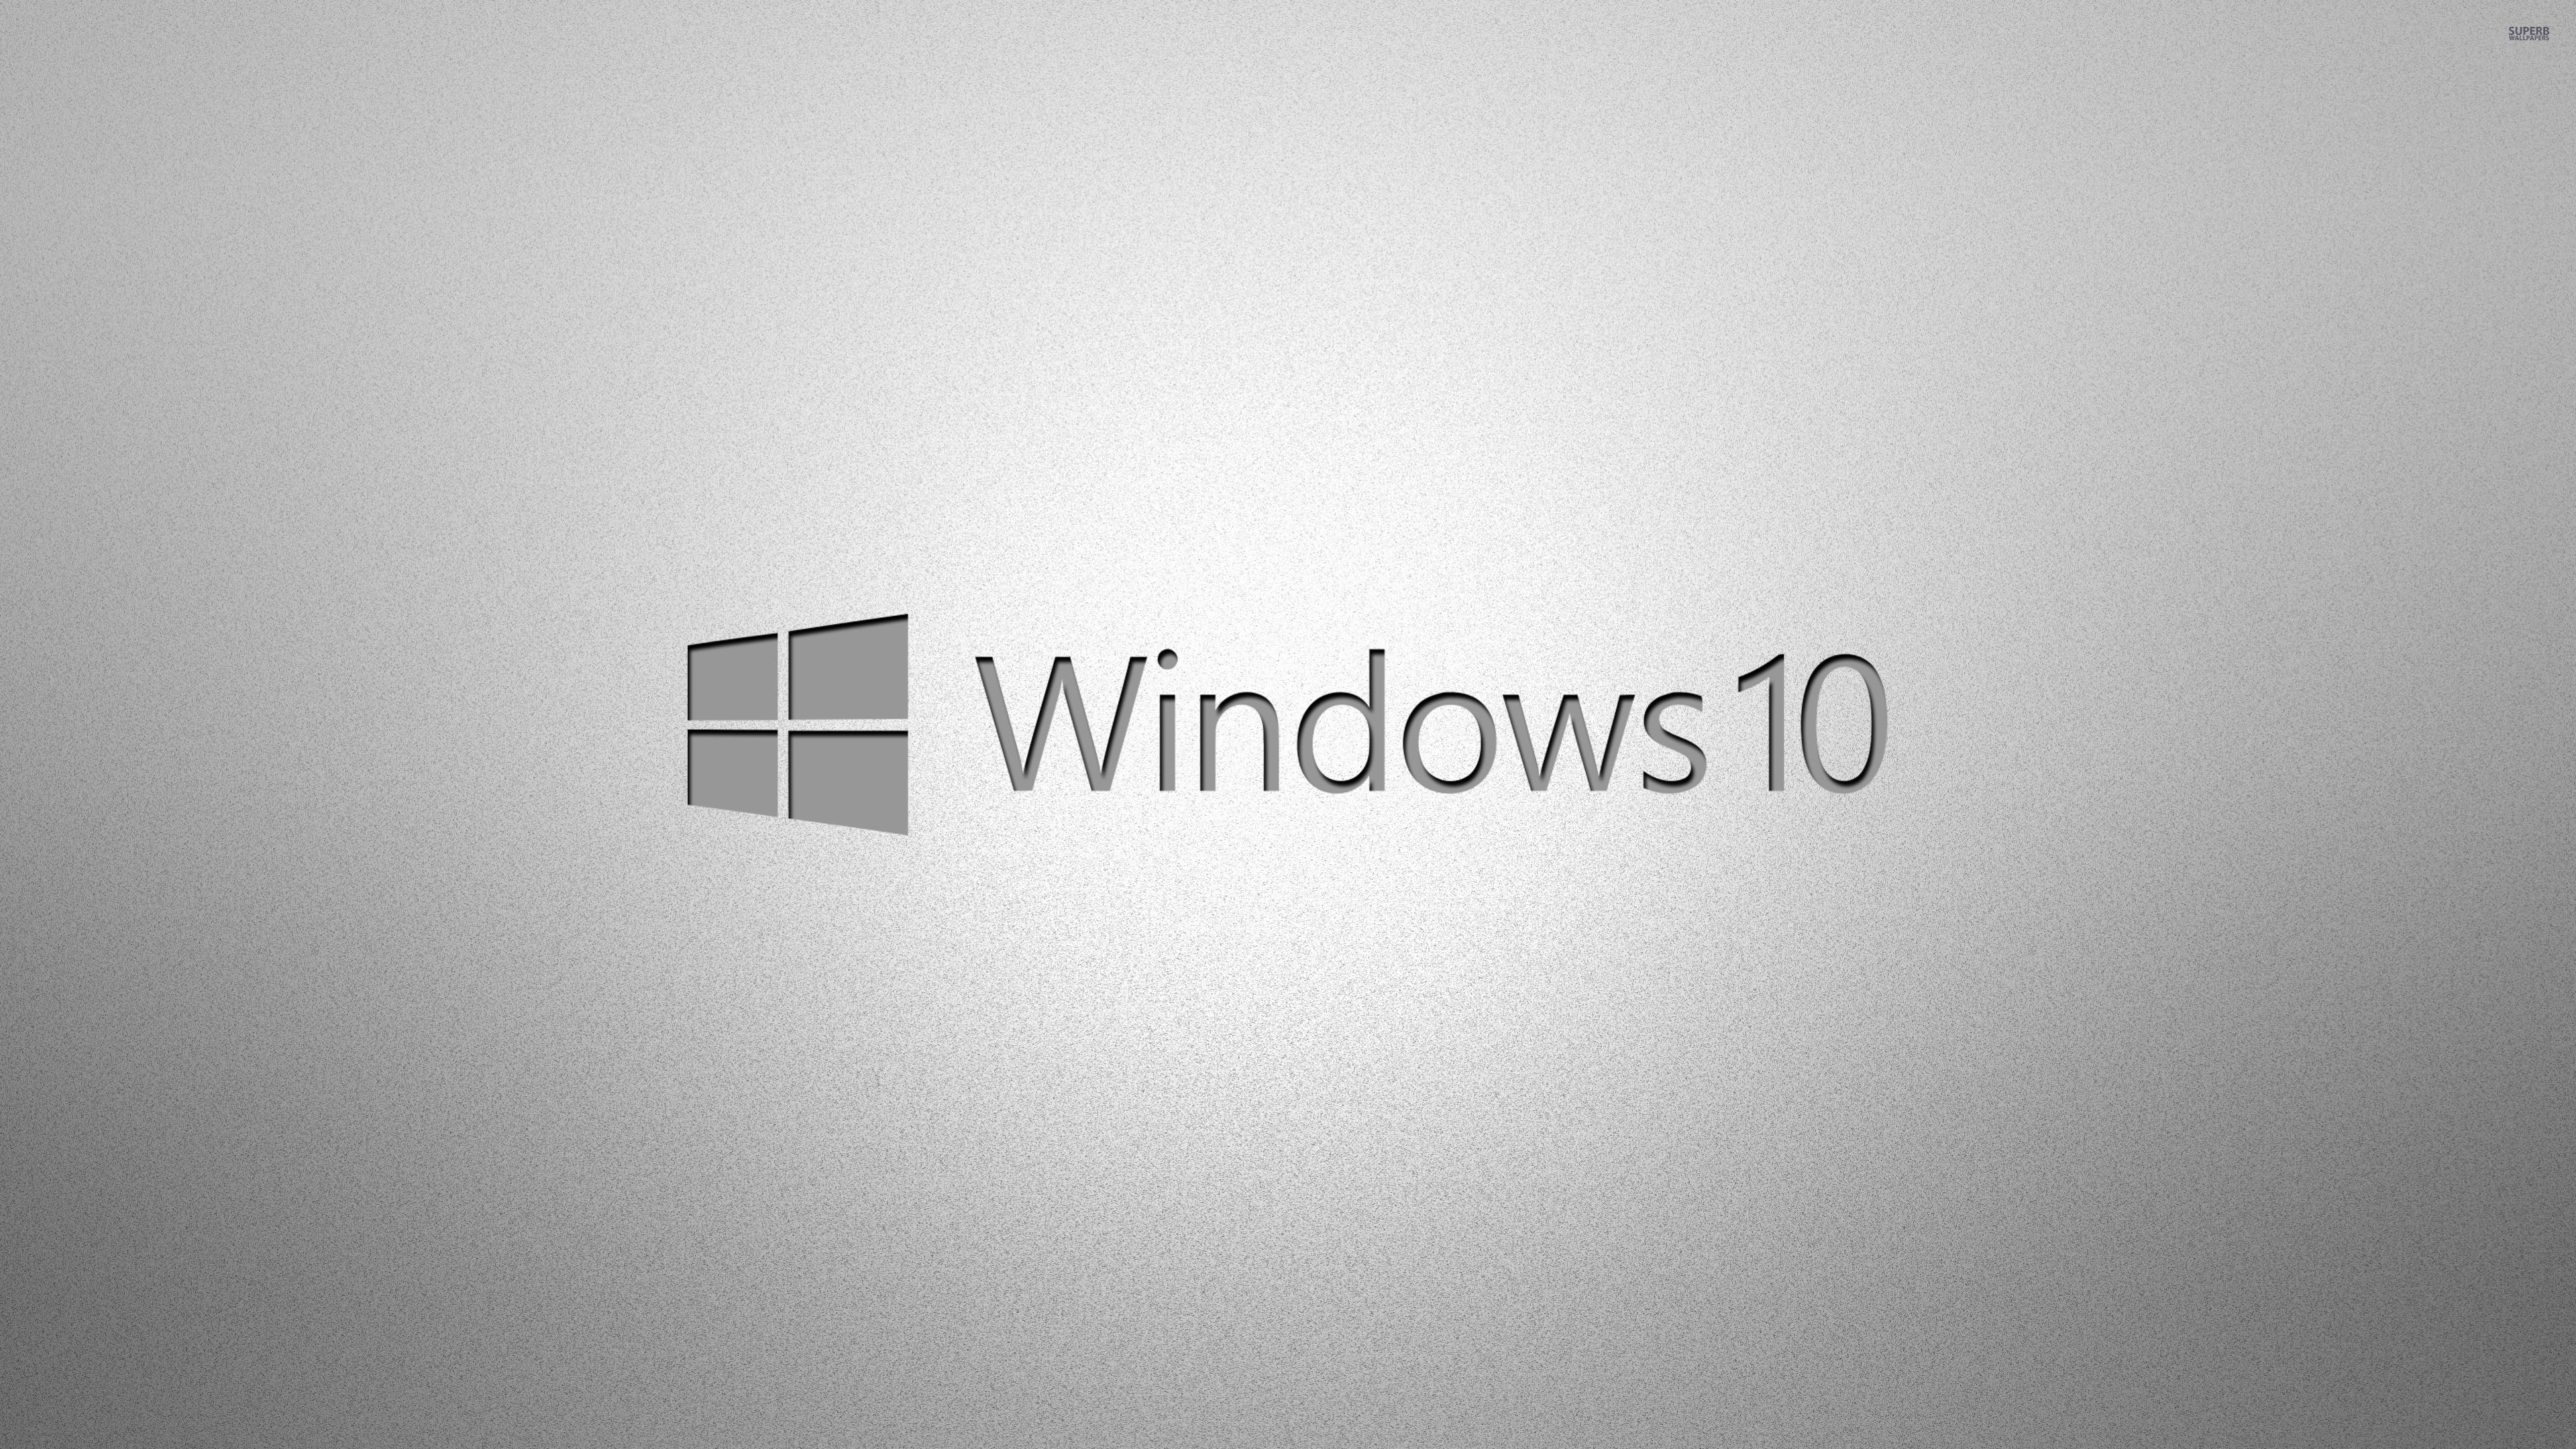 Windows 10 gray text logo on grainy gray wallpaper - Computer ...